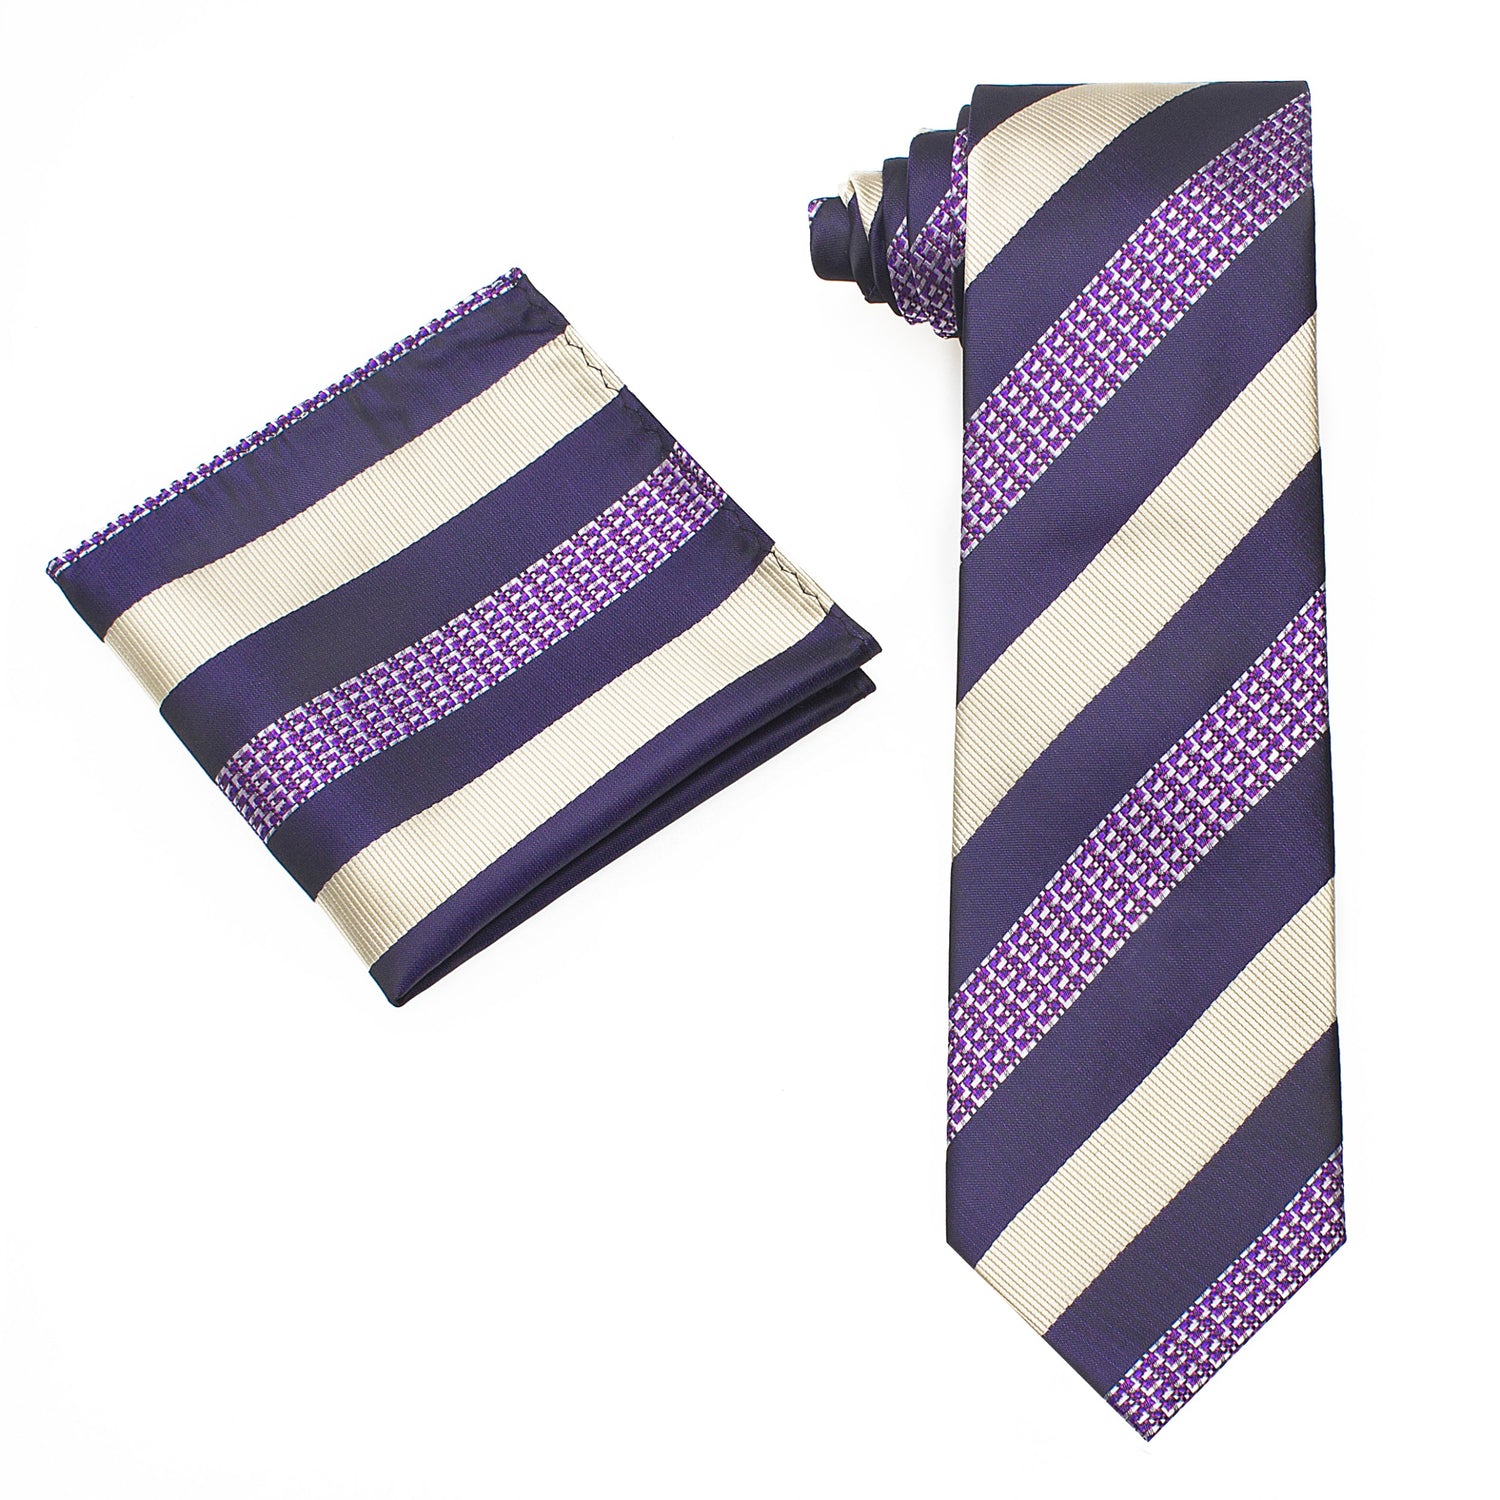 Alt View: A Purple, Cream Check And Stripe Pattern Silk Necktie, Matching Pocket Square